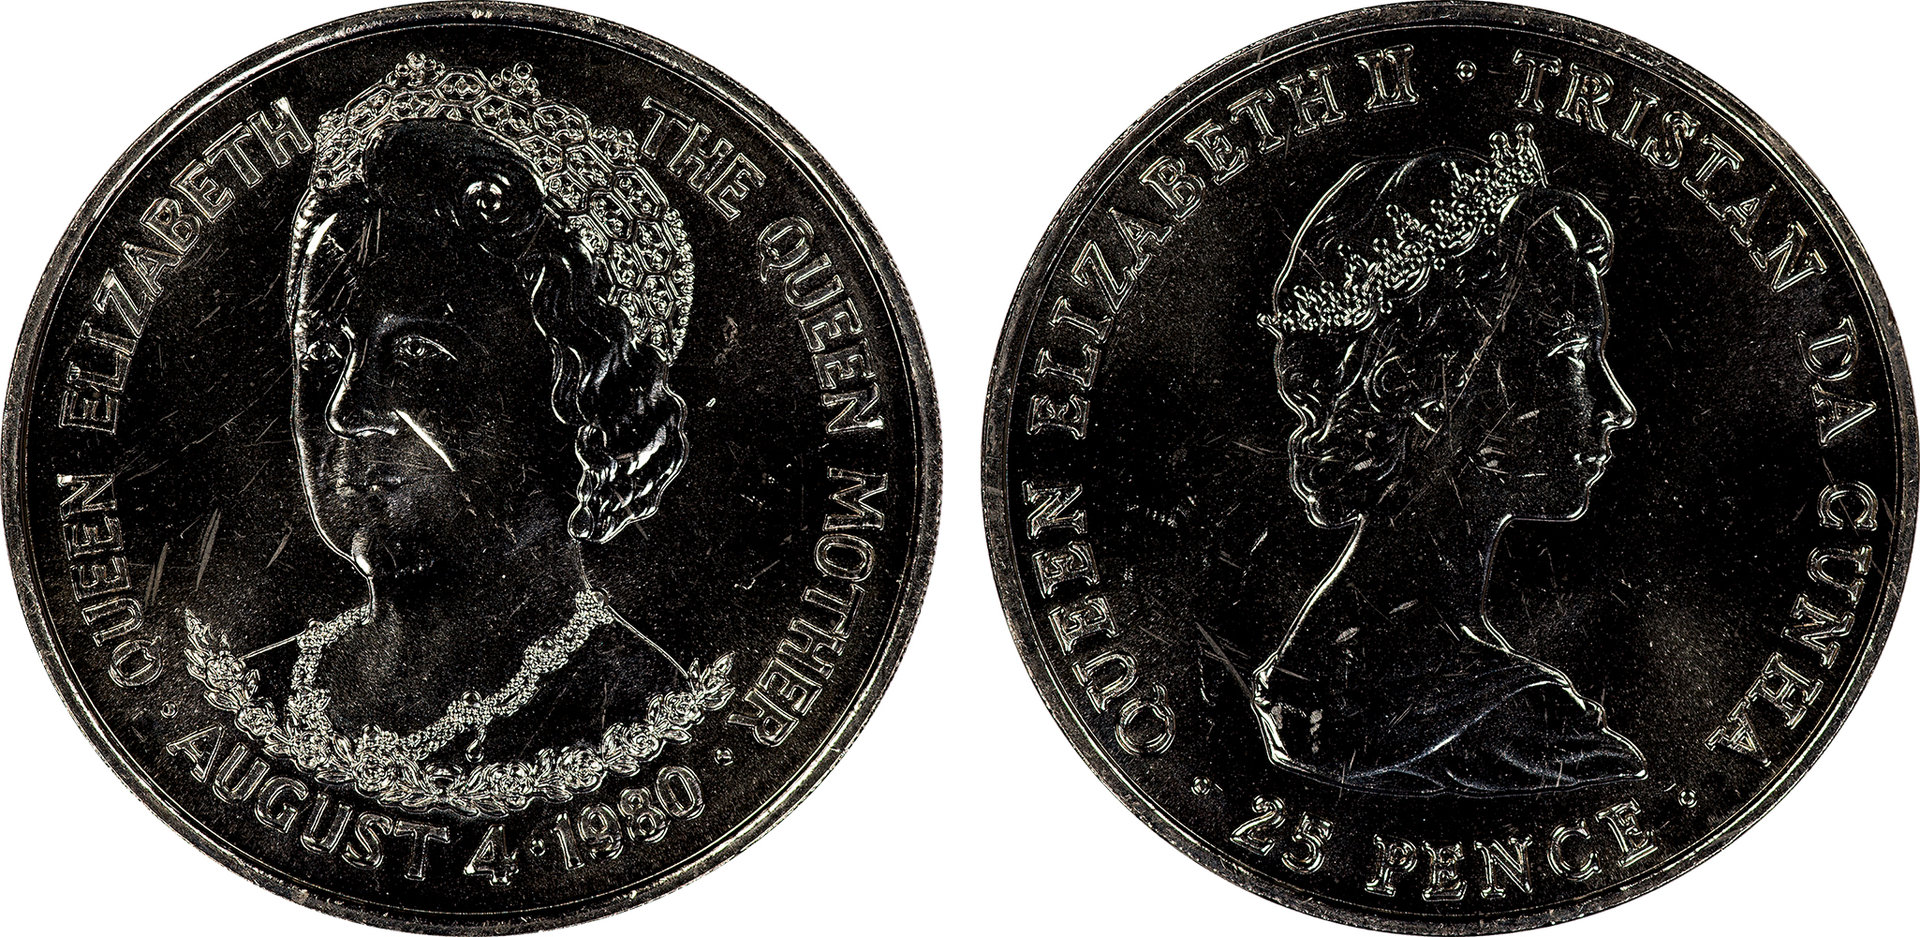 Tristan da Cunha - 1980 25 Pence.jpg